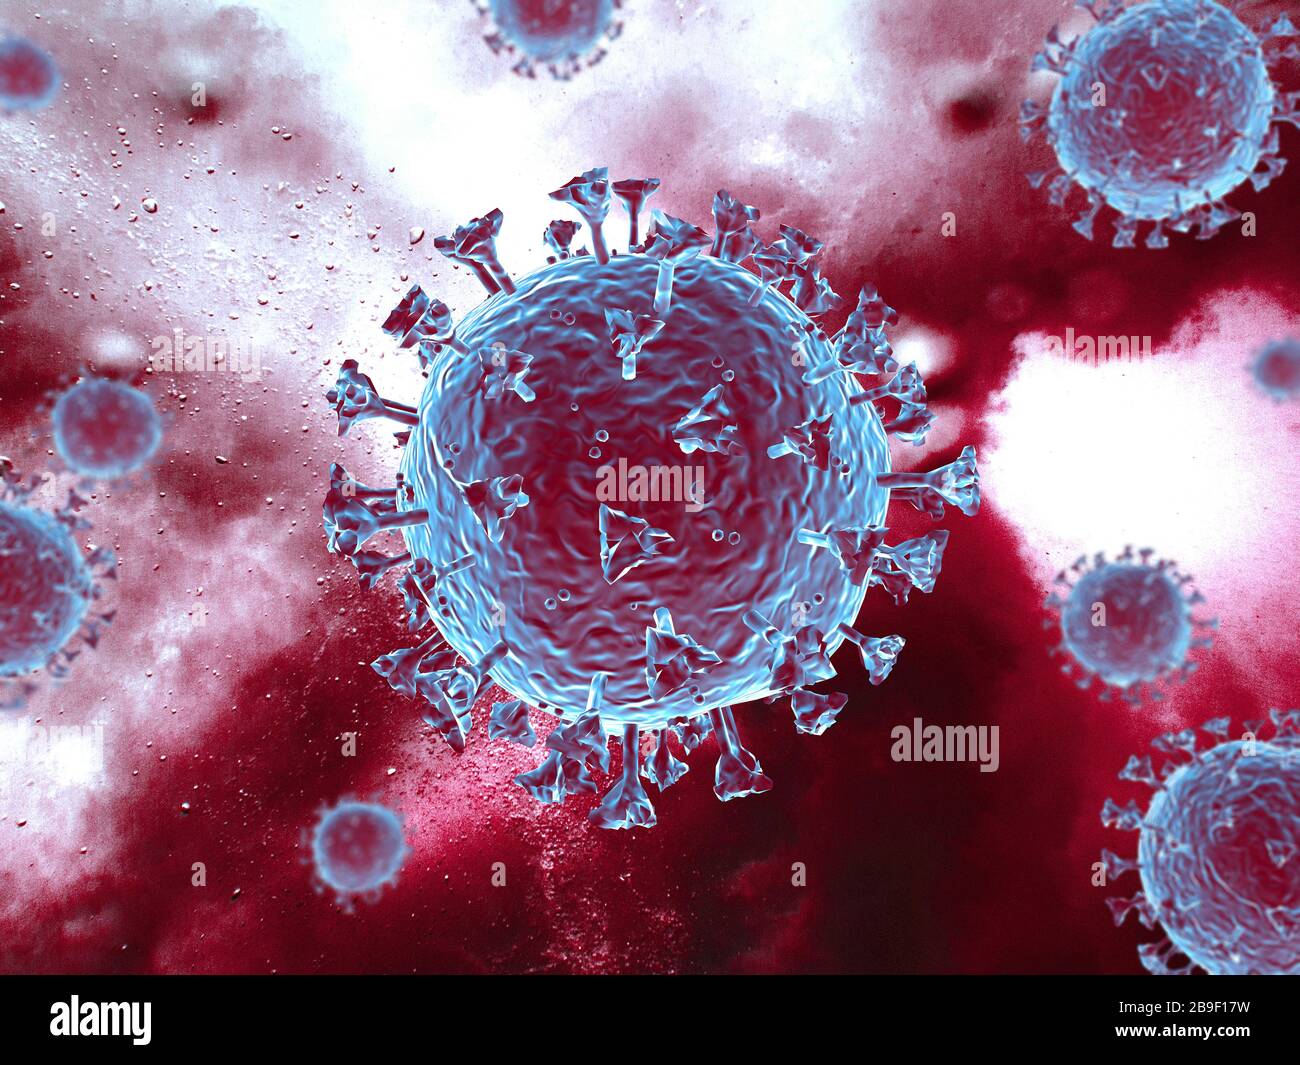 3D illustration of coronavirus on a colored background. Stock Photo